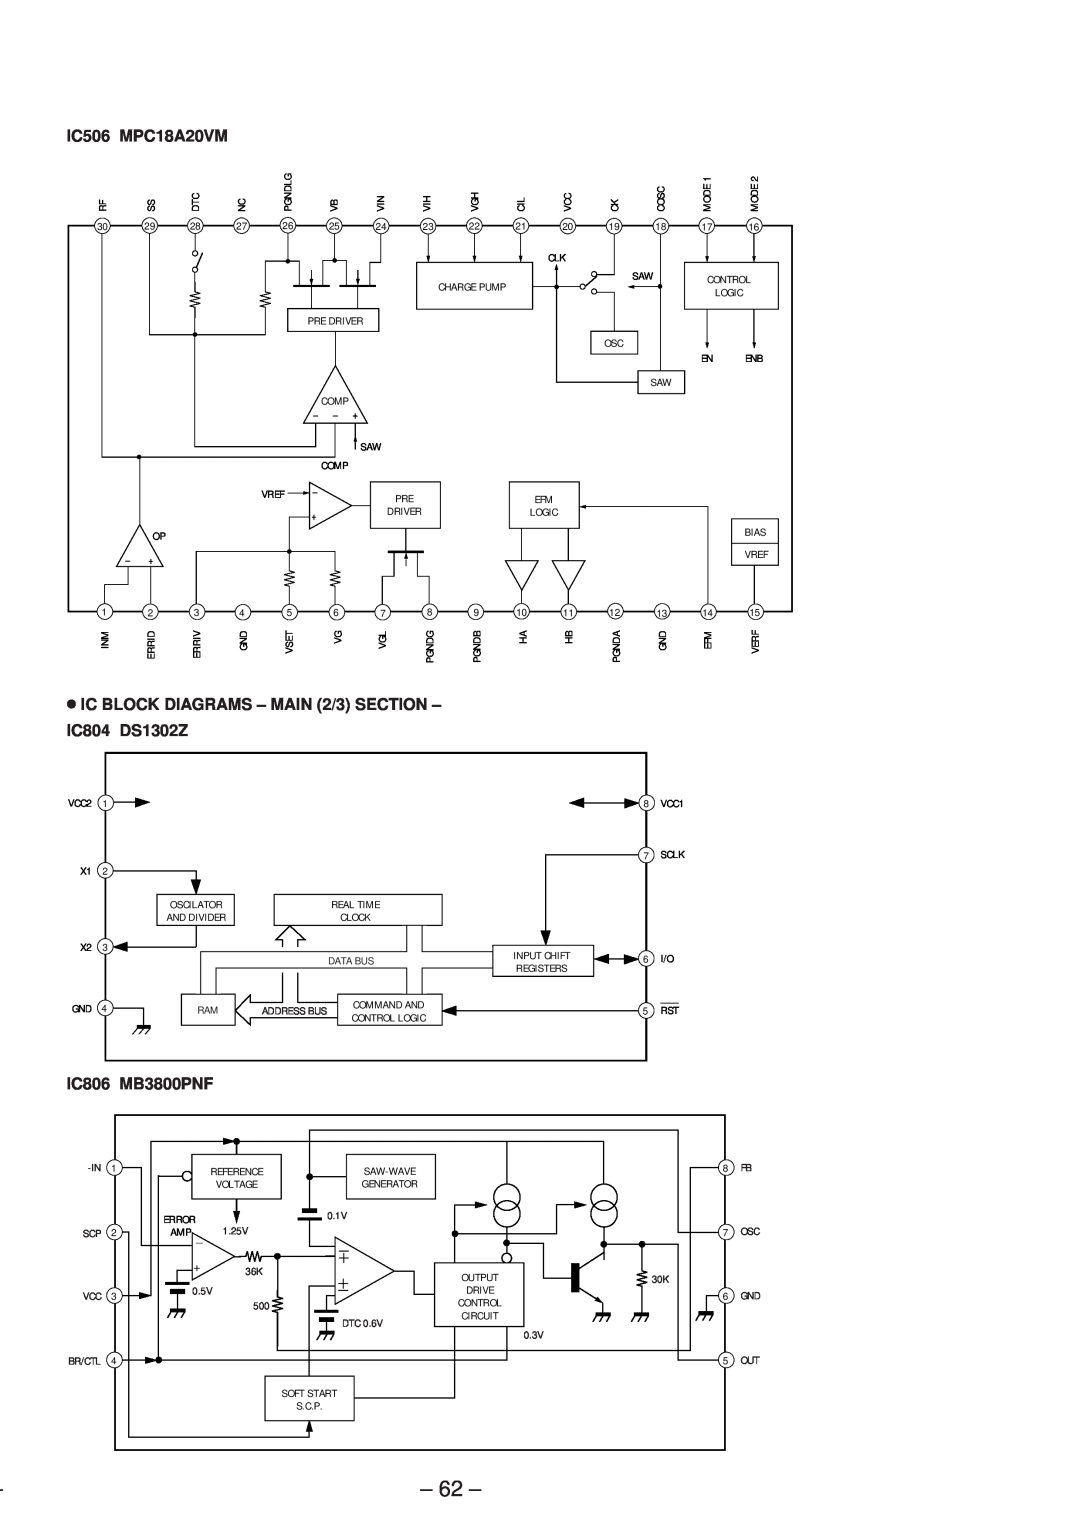 Sony MZ-R50 service manual IC506 MPC18A20VM, IC806 MB3800PNF 